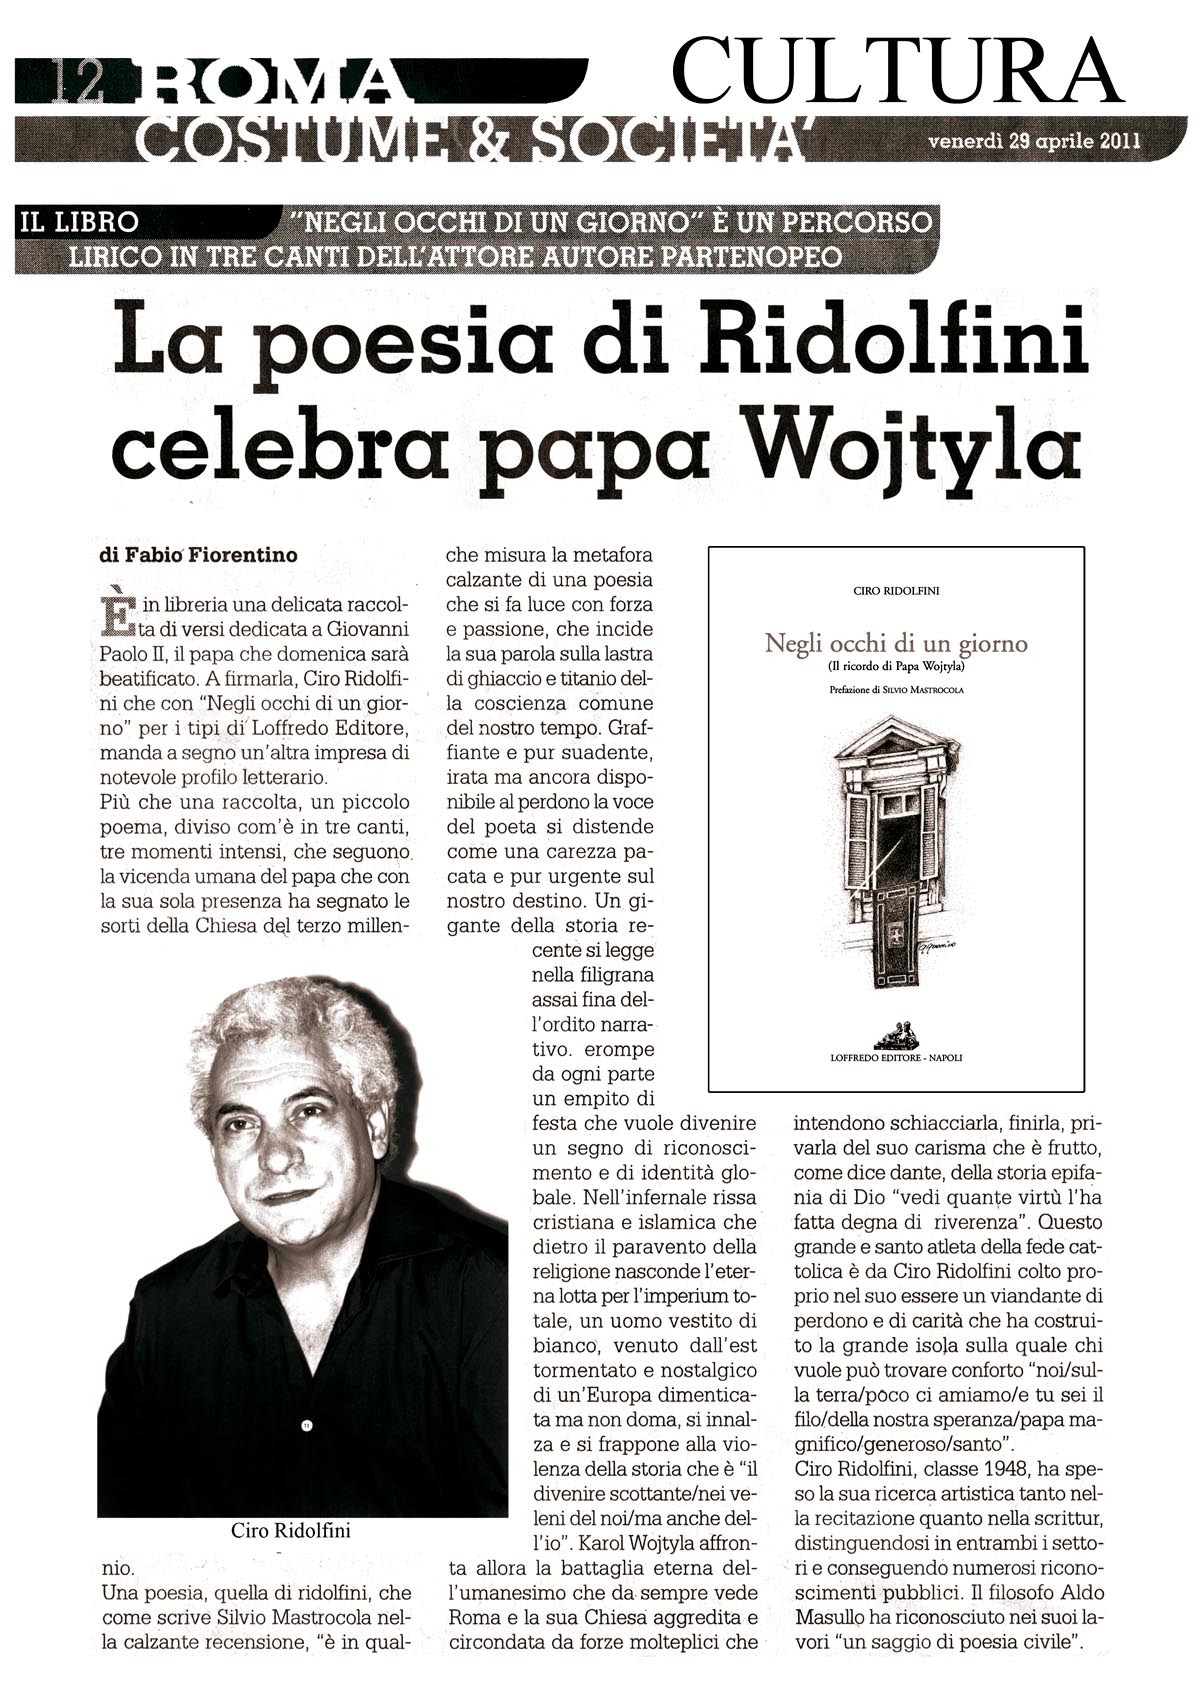 La poesia di Ridolfini celebra papa Wojtyla